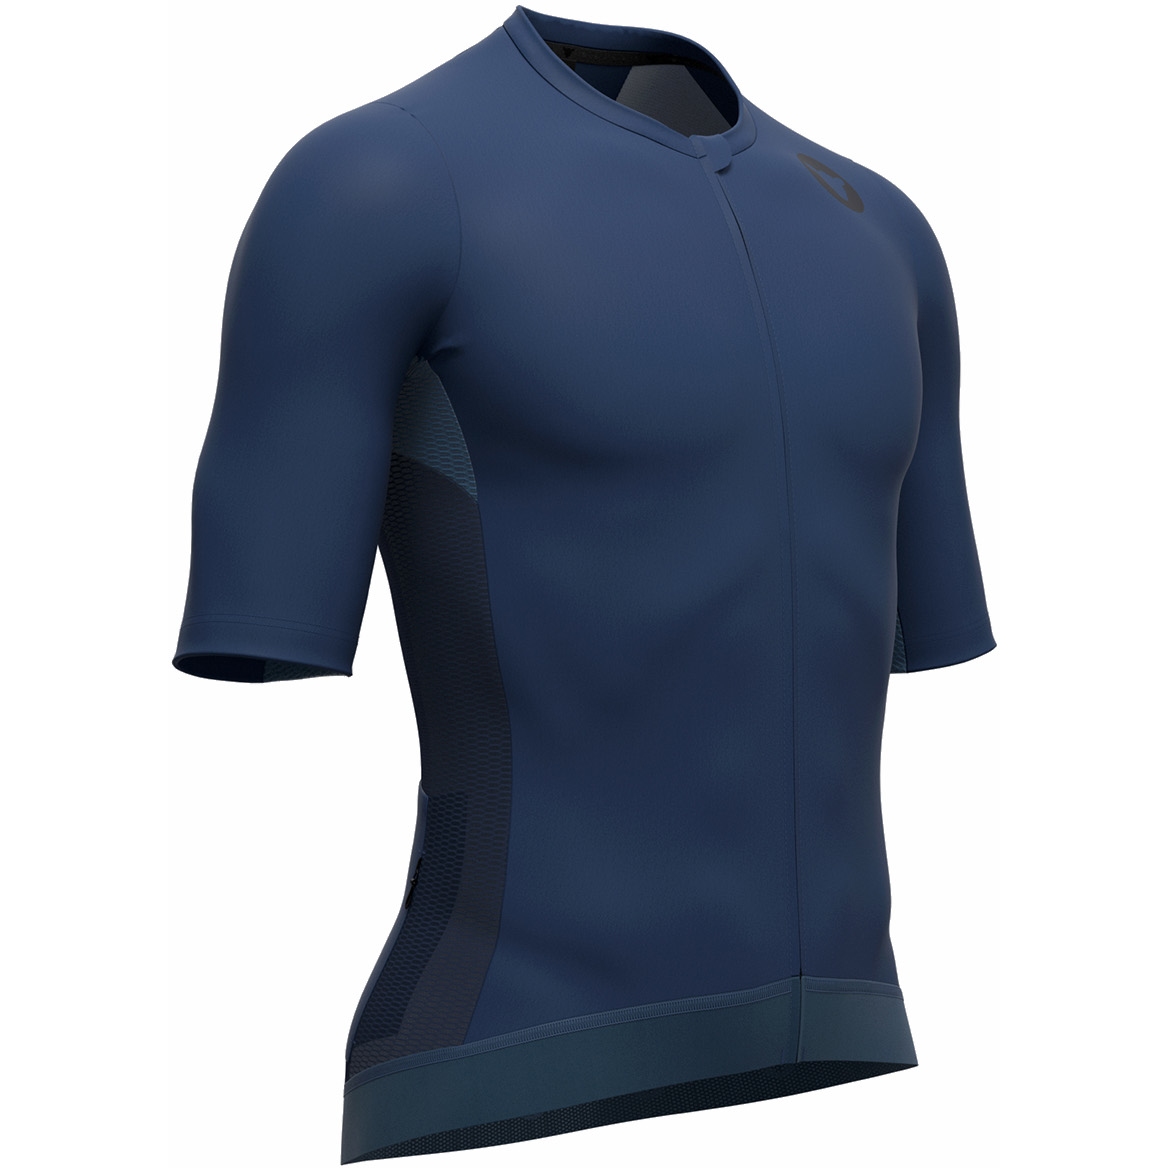 Black Sheep Cycling TEAM Short Sleeve Jersey Men - Indigo Blue